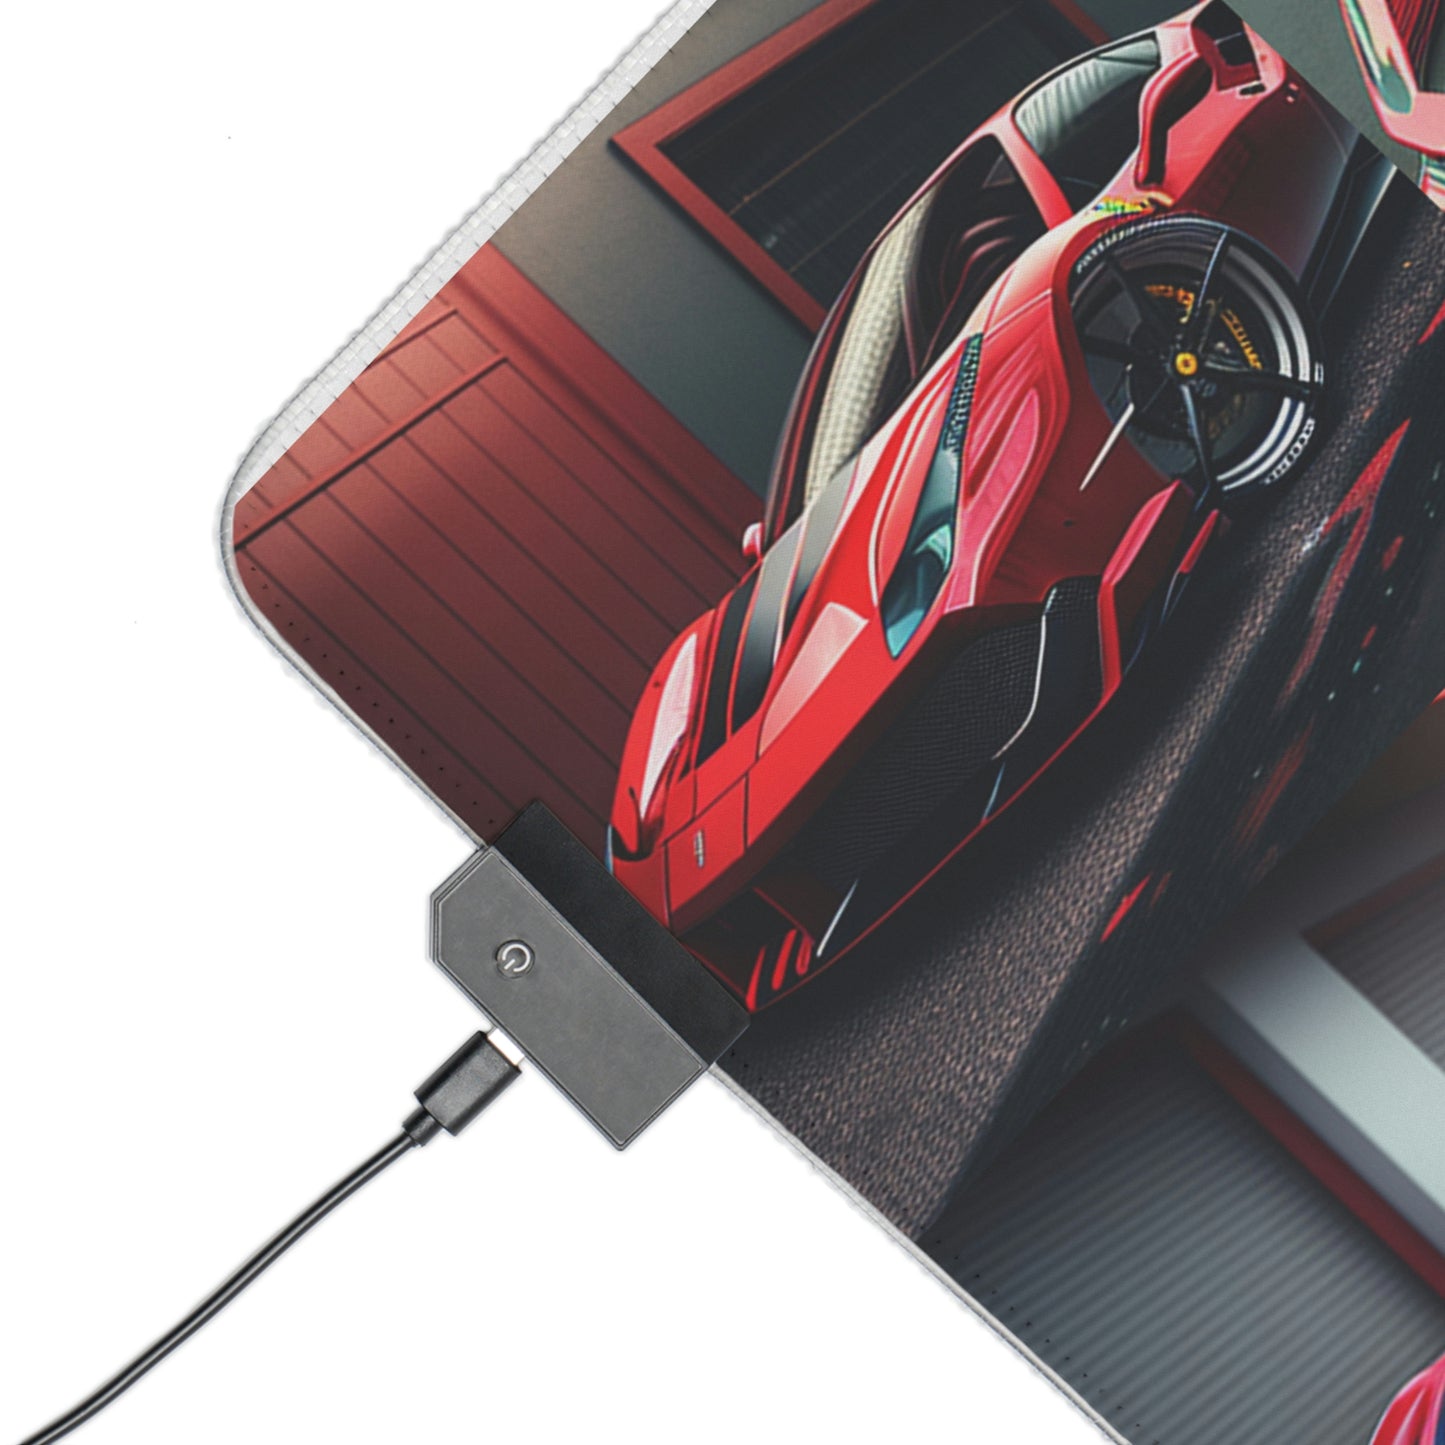 LED Gaming Mouse Pad Ferrari Hyper 4 Pack